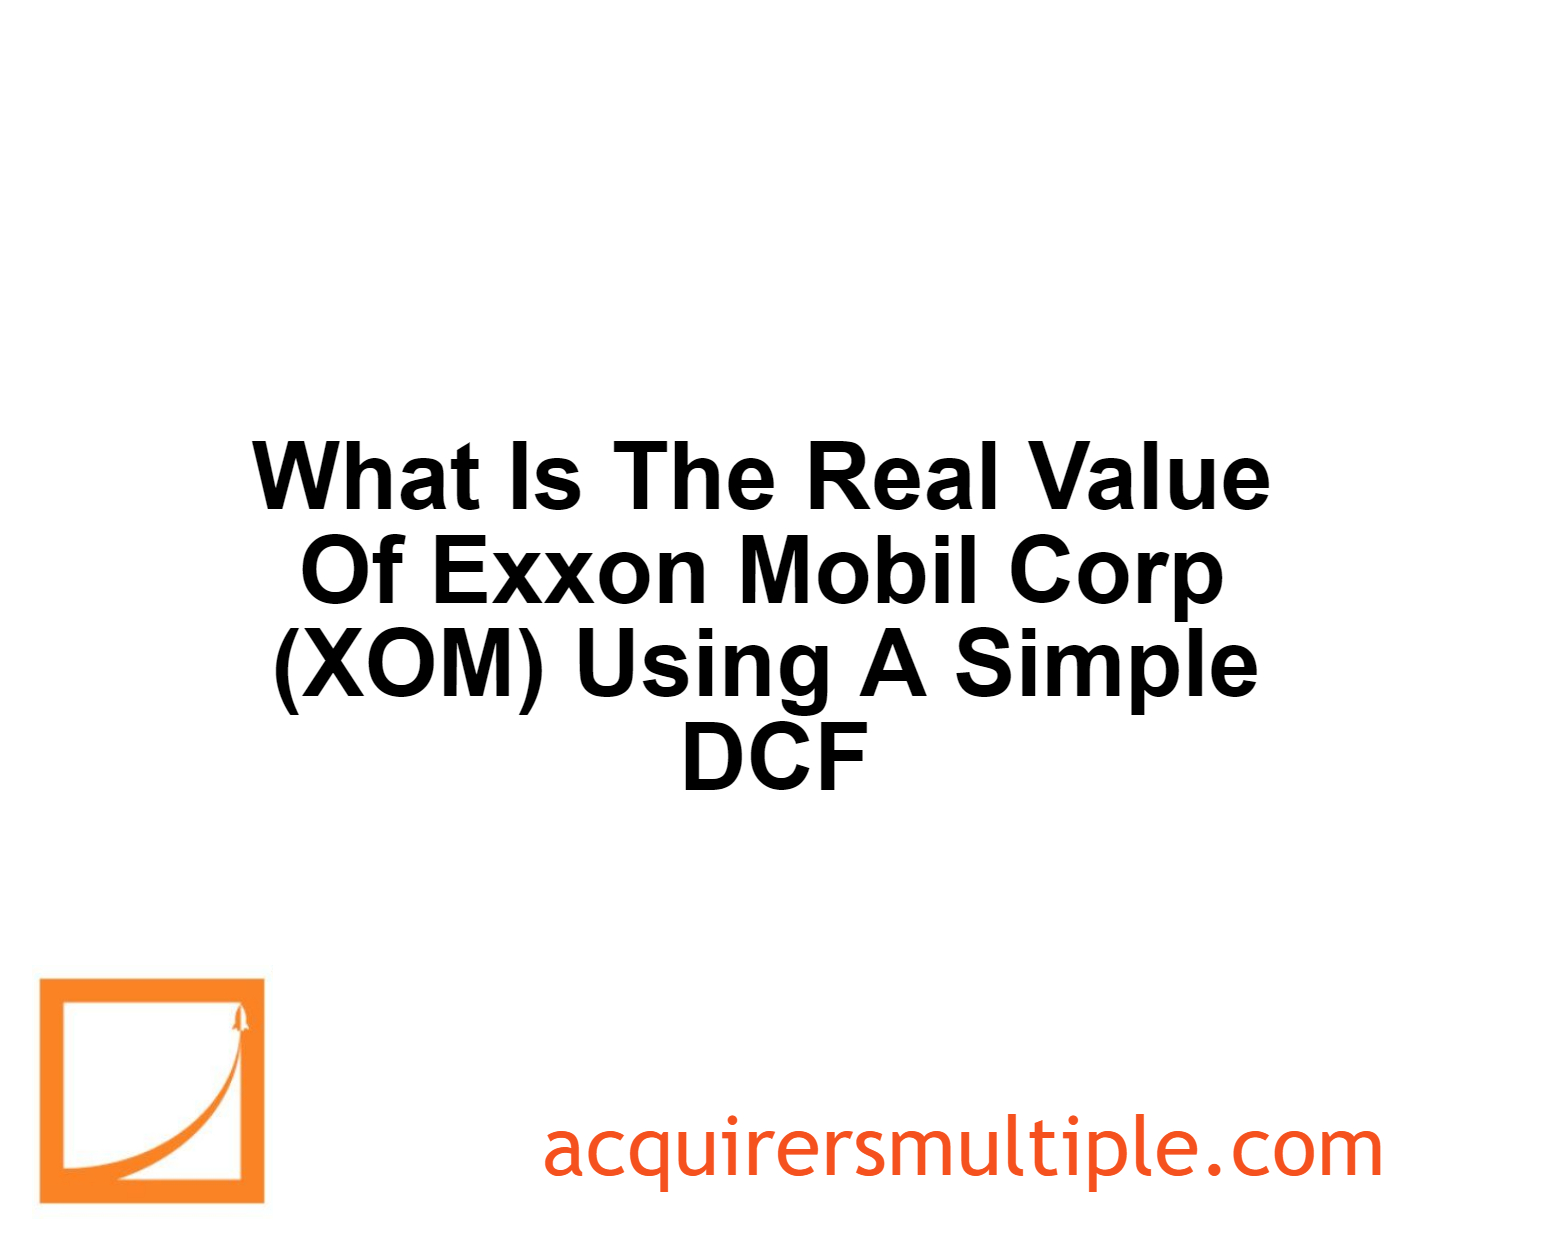 ExxonMobil Stock Forecast 2025: Here's My Take on XOM